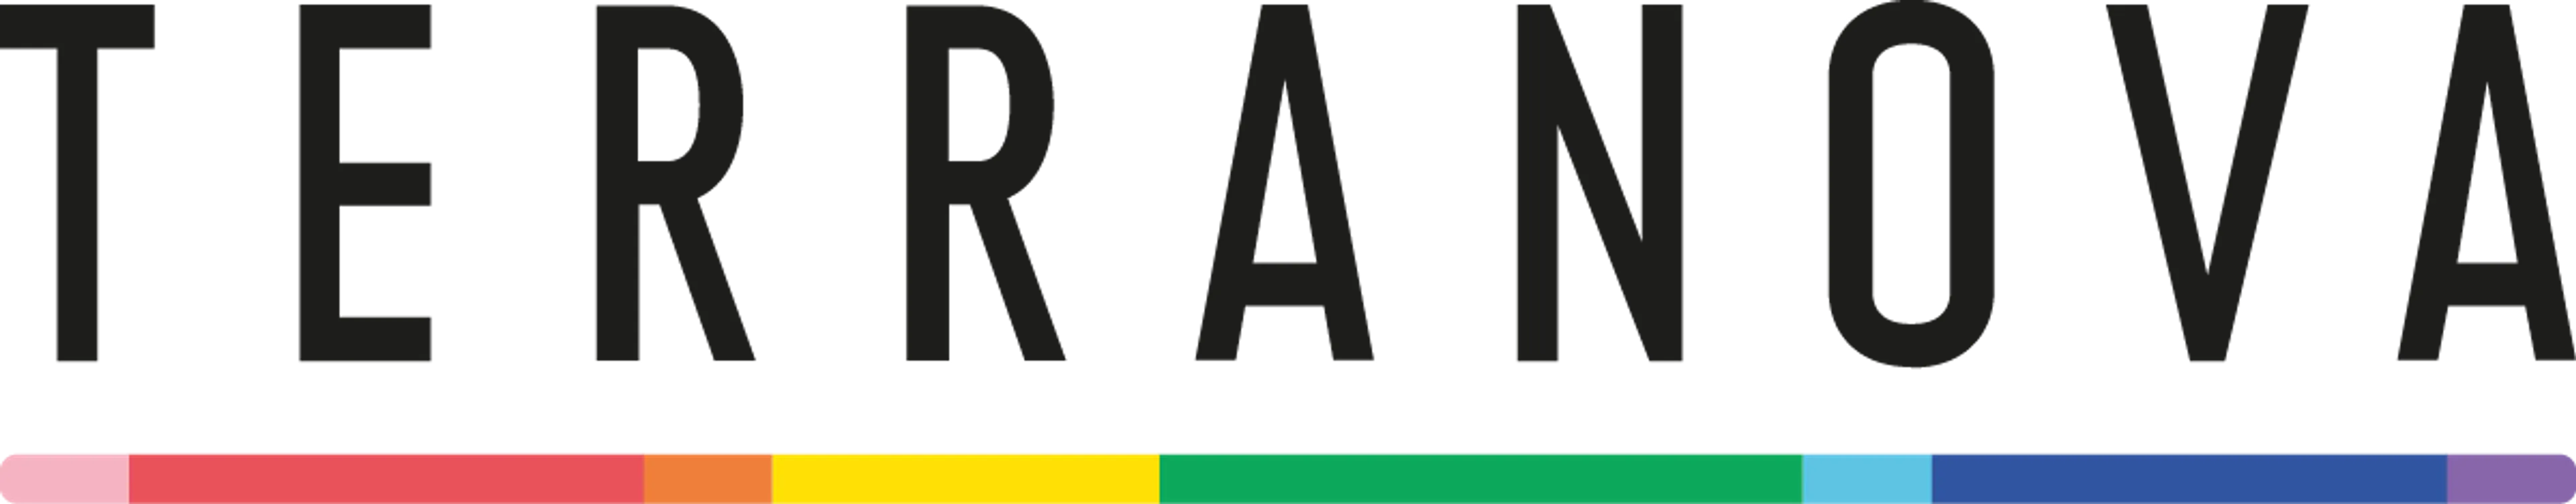 TERRANOVA logo